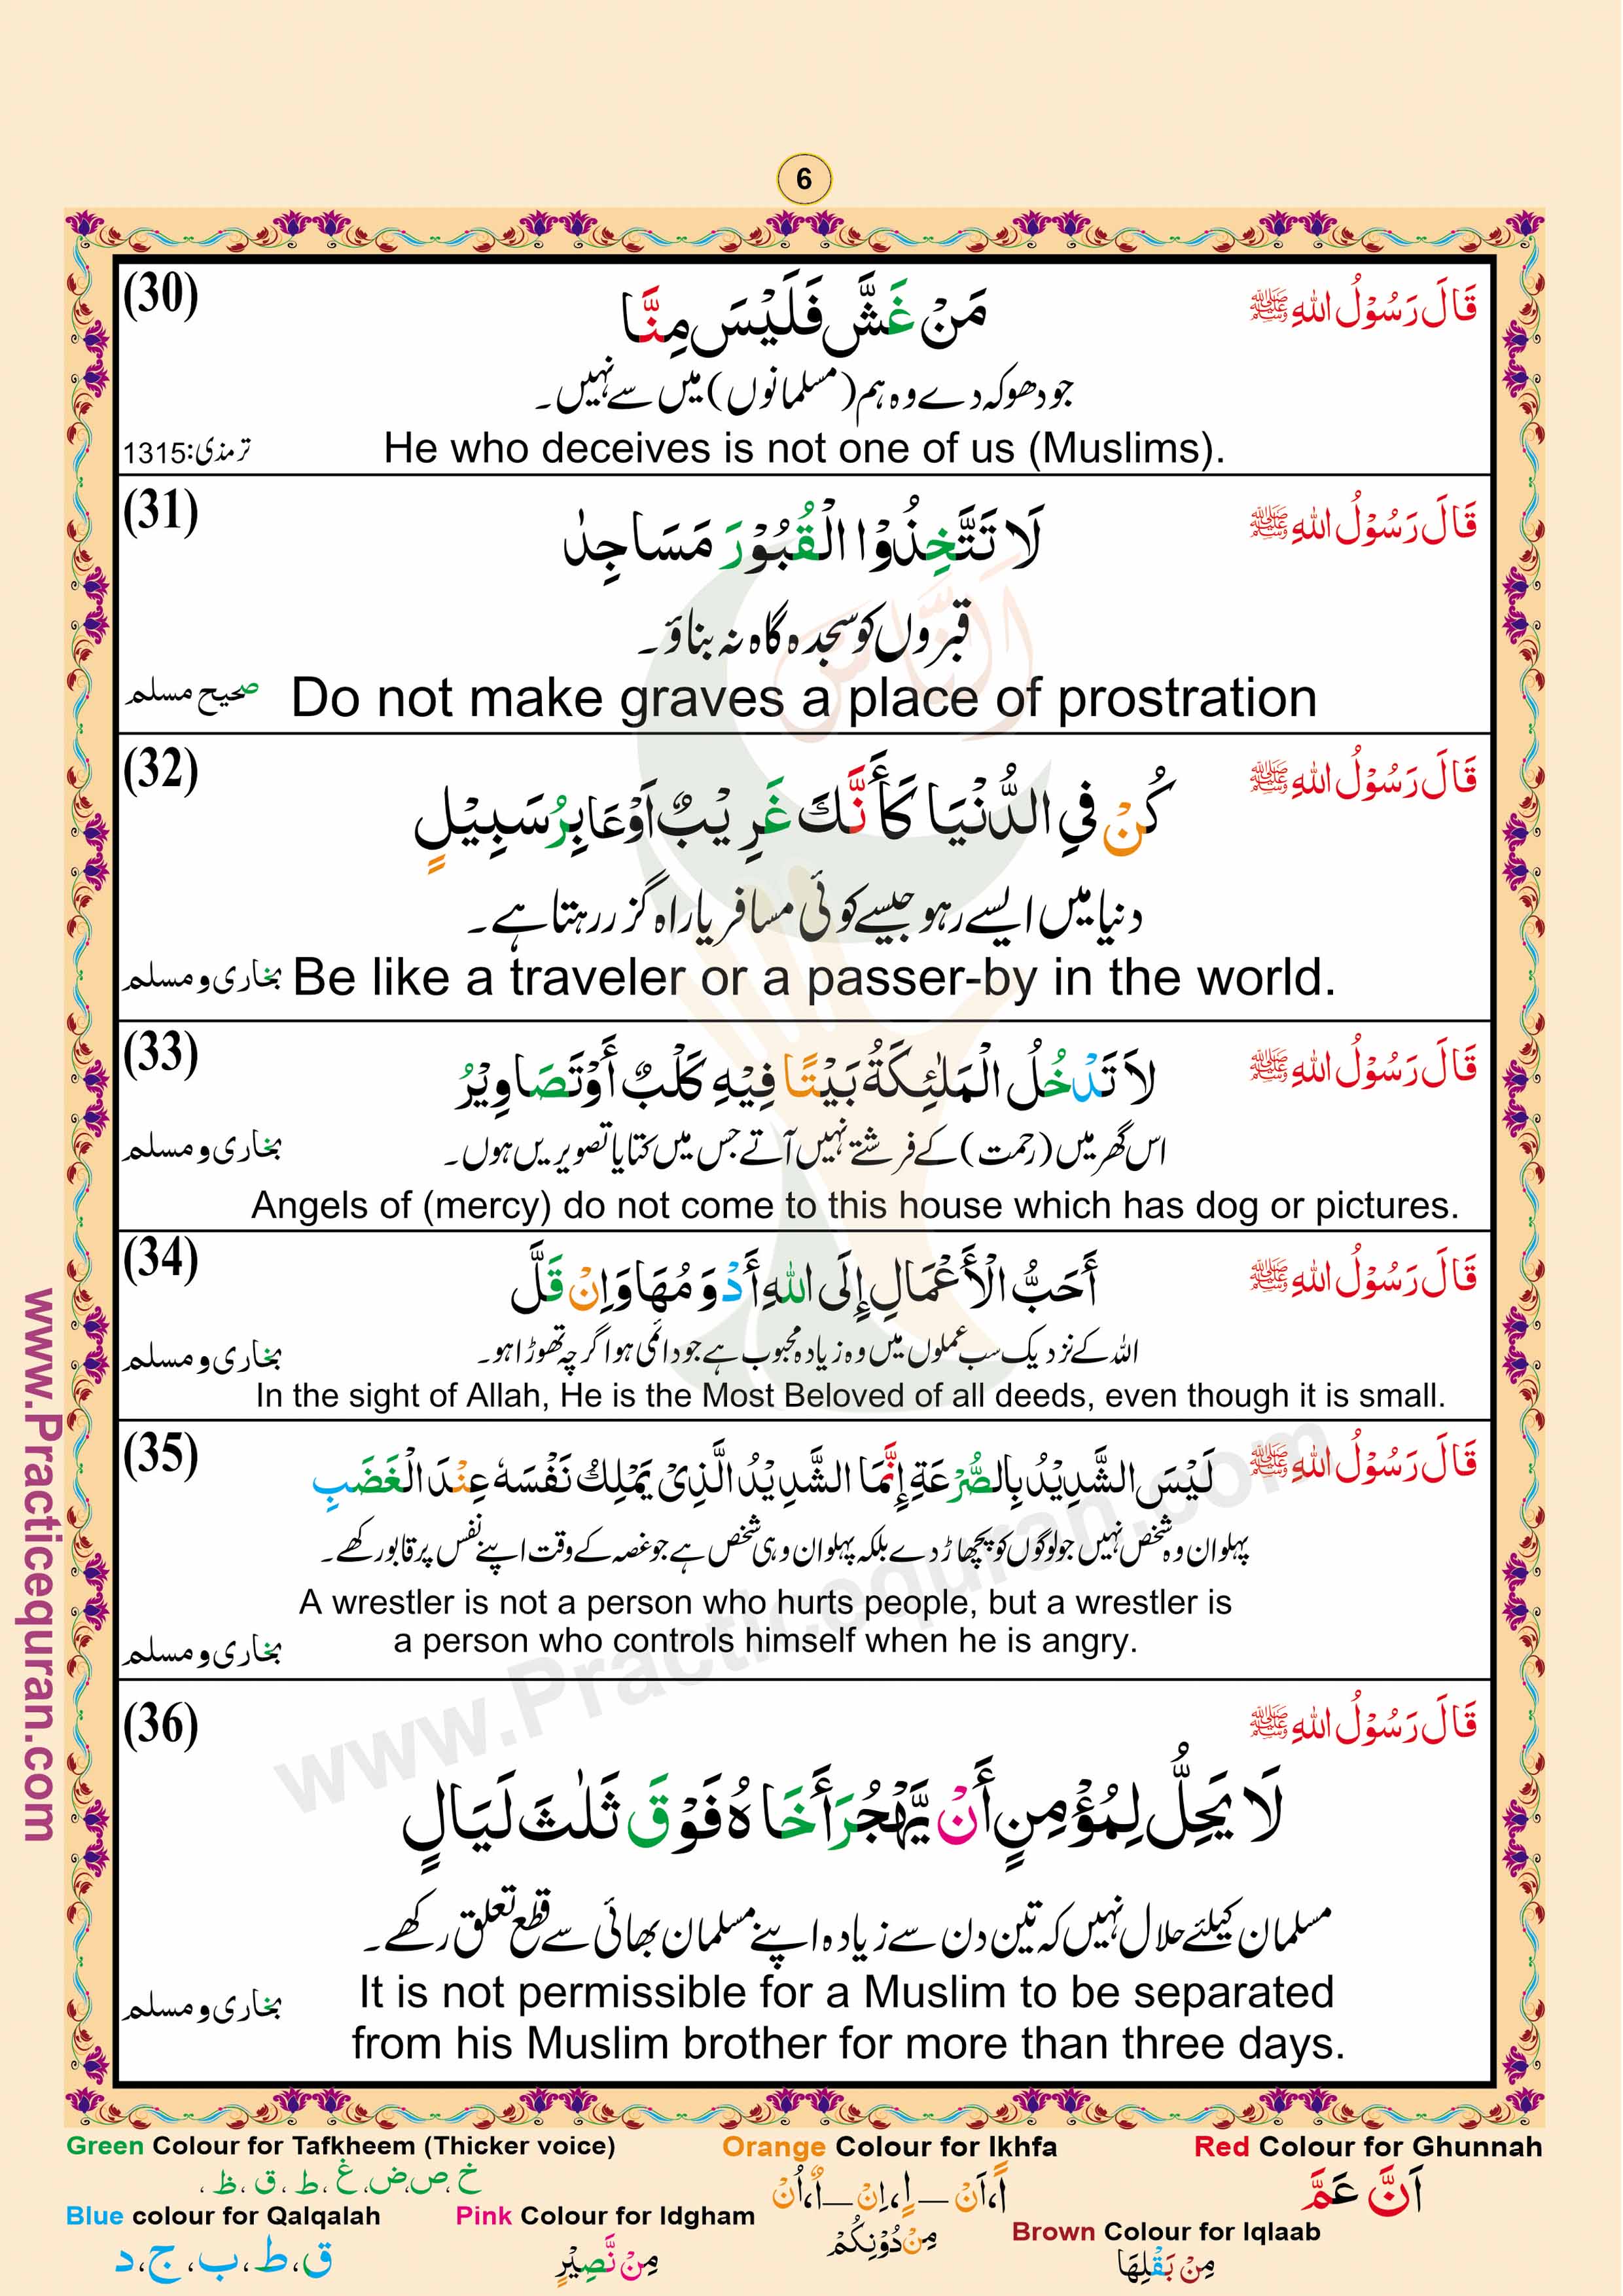 Read Forty Hadith Page No 6, Practice Quran